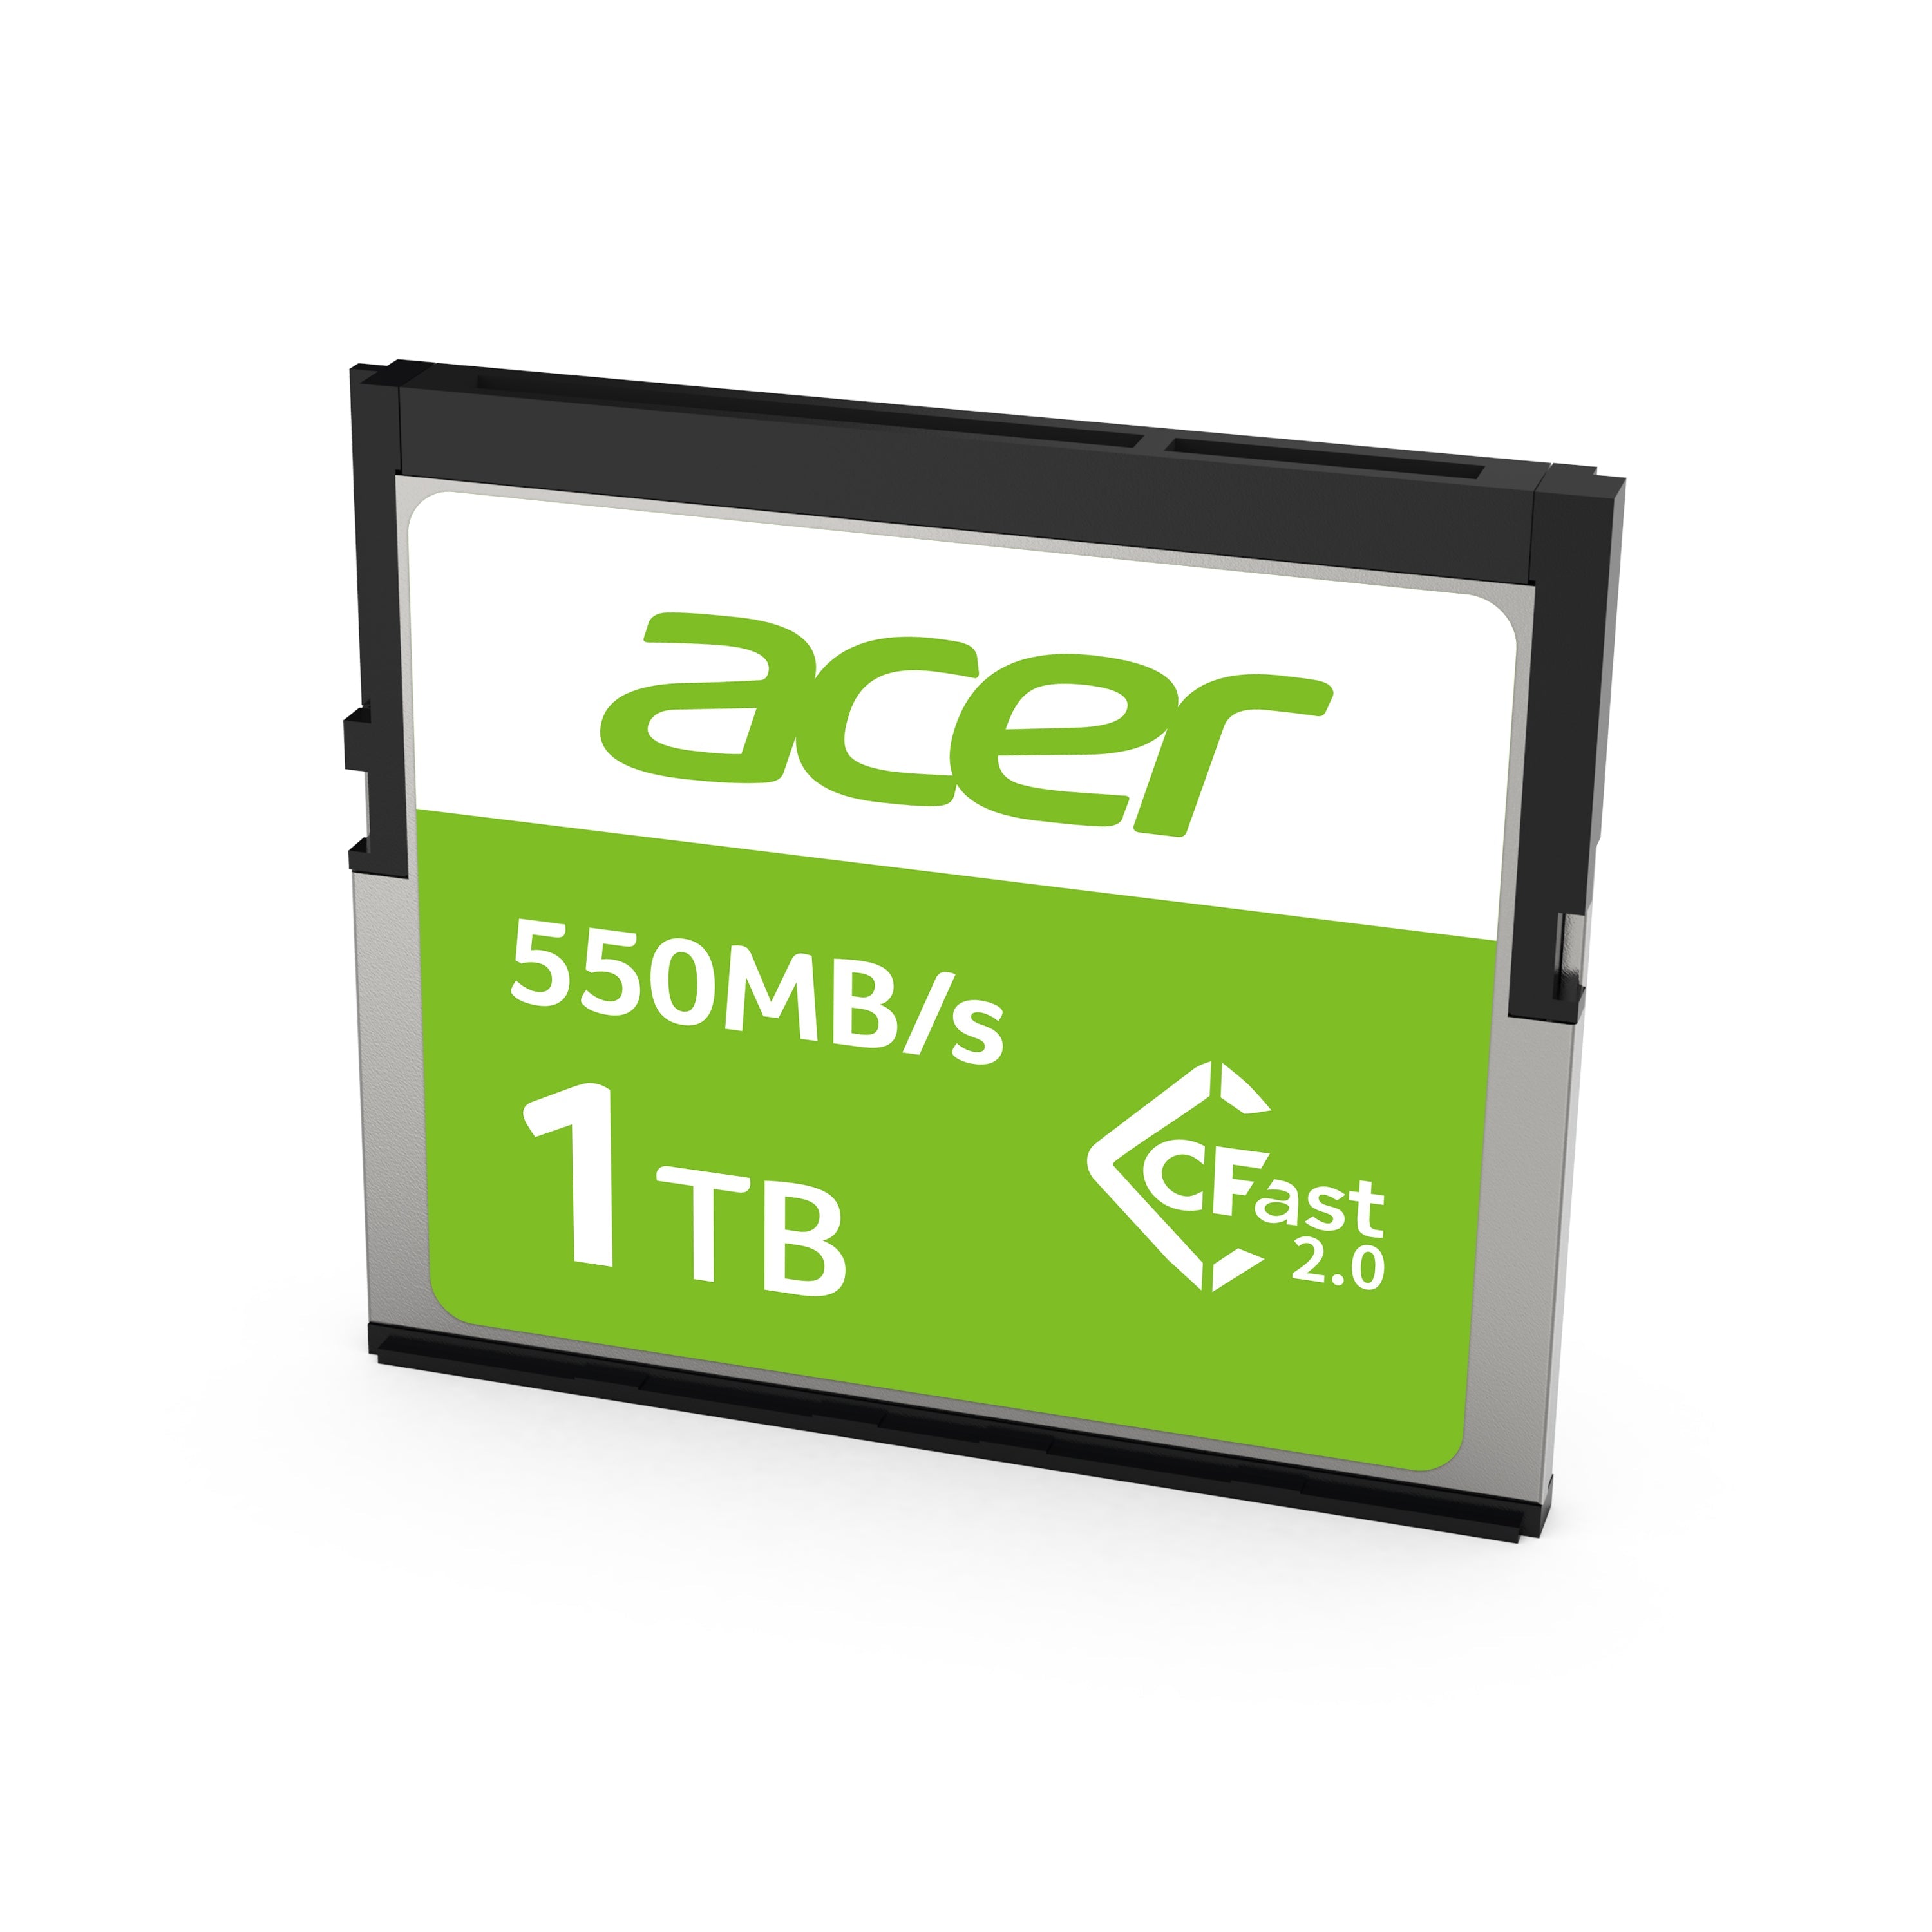 Memoria Acer Compact Flash 2.0 Cf100 1tb 550 Mb/S (Bl.9bwwa.317)